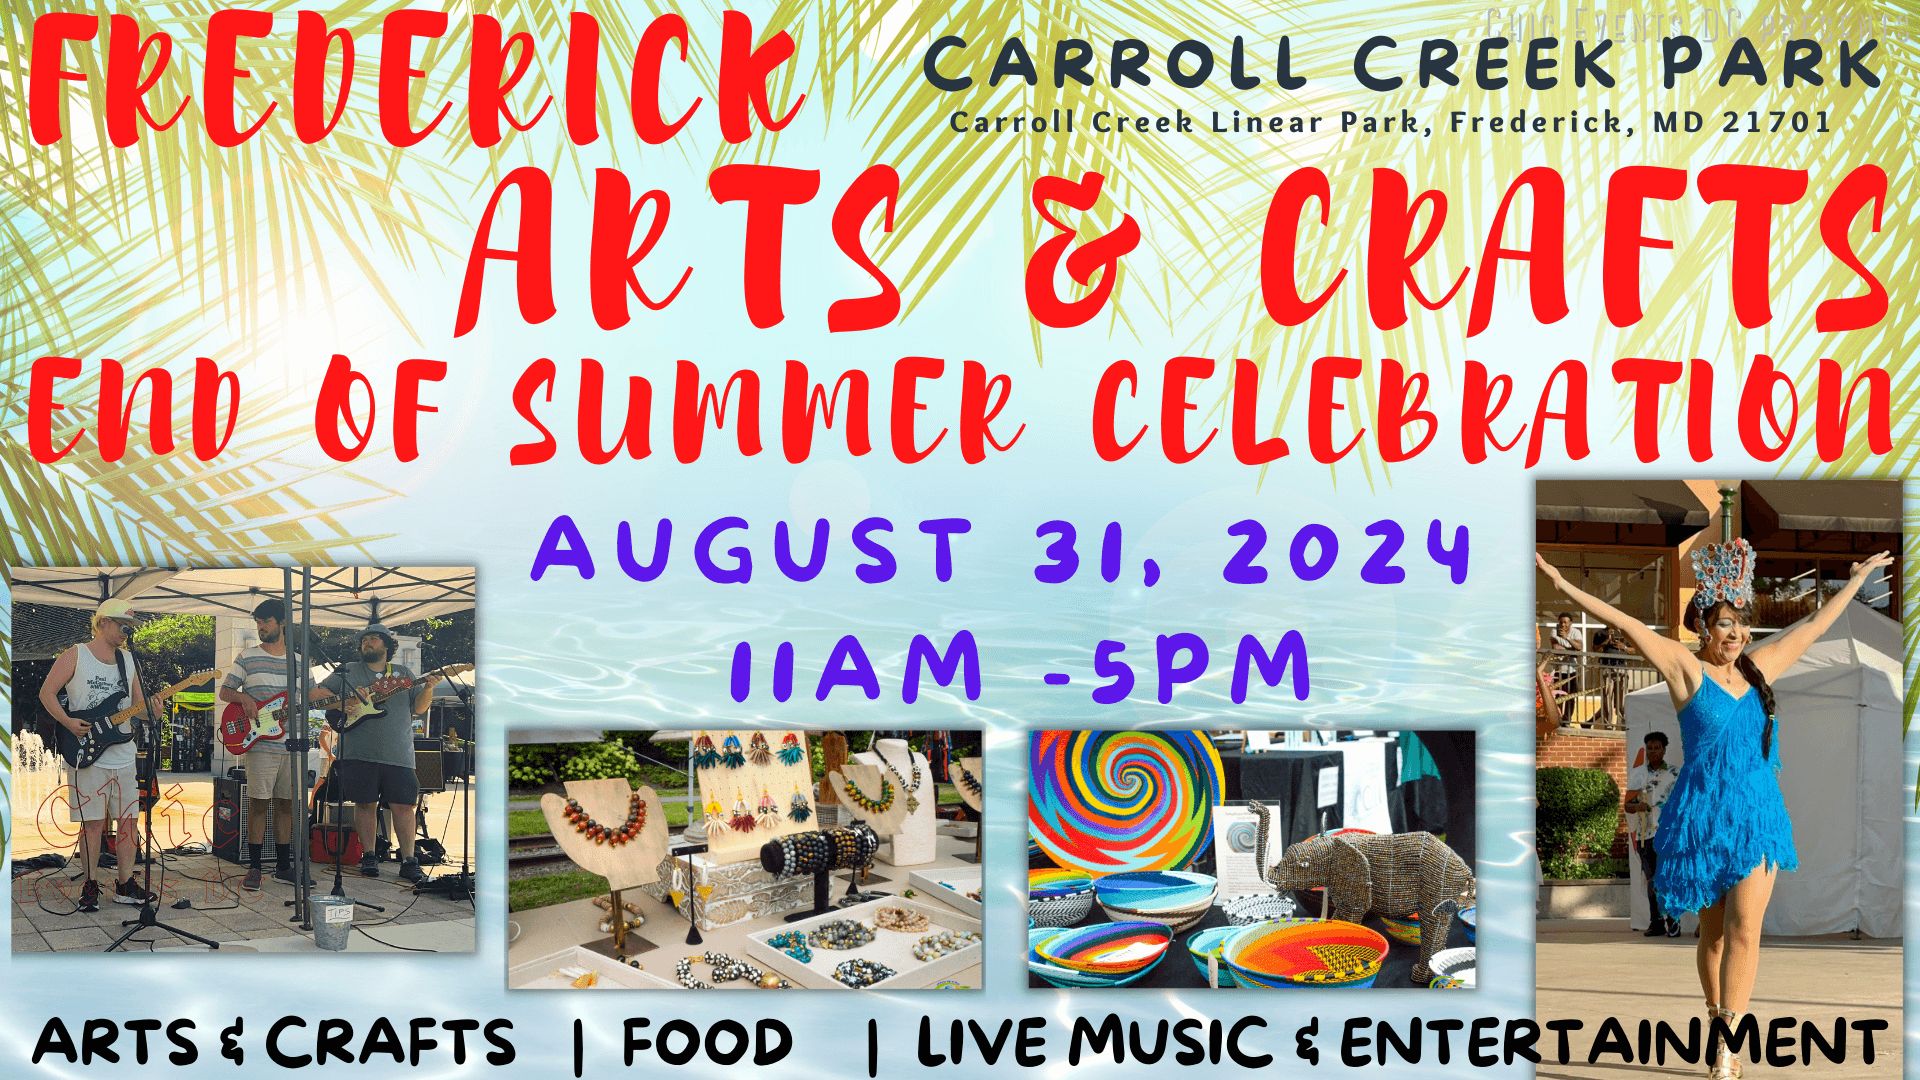 Frederick End Of Summer Celebration @ Carroll Creek Park, Frederick, Maryland, United States